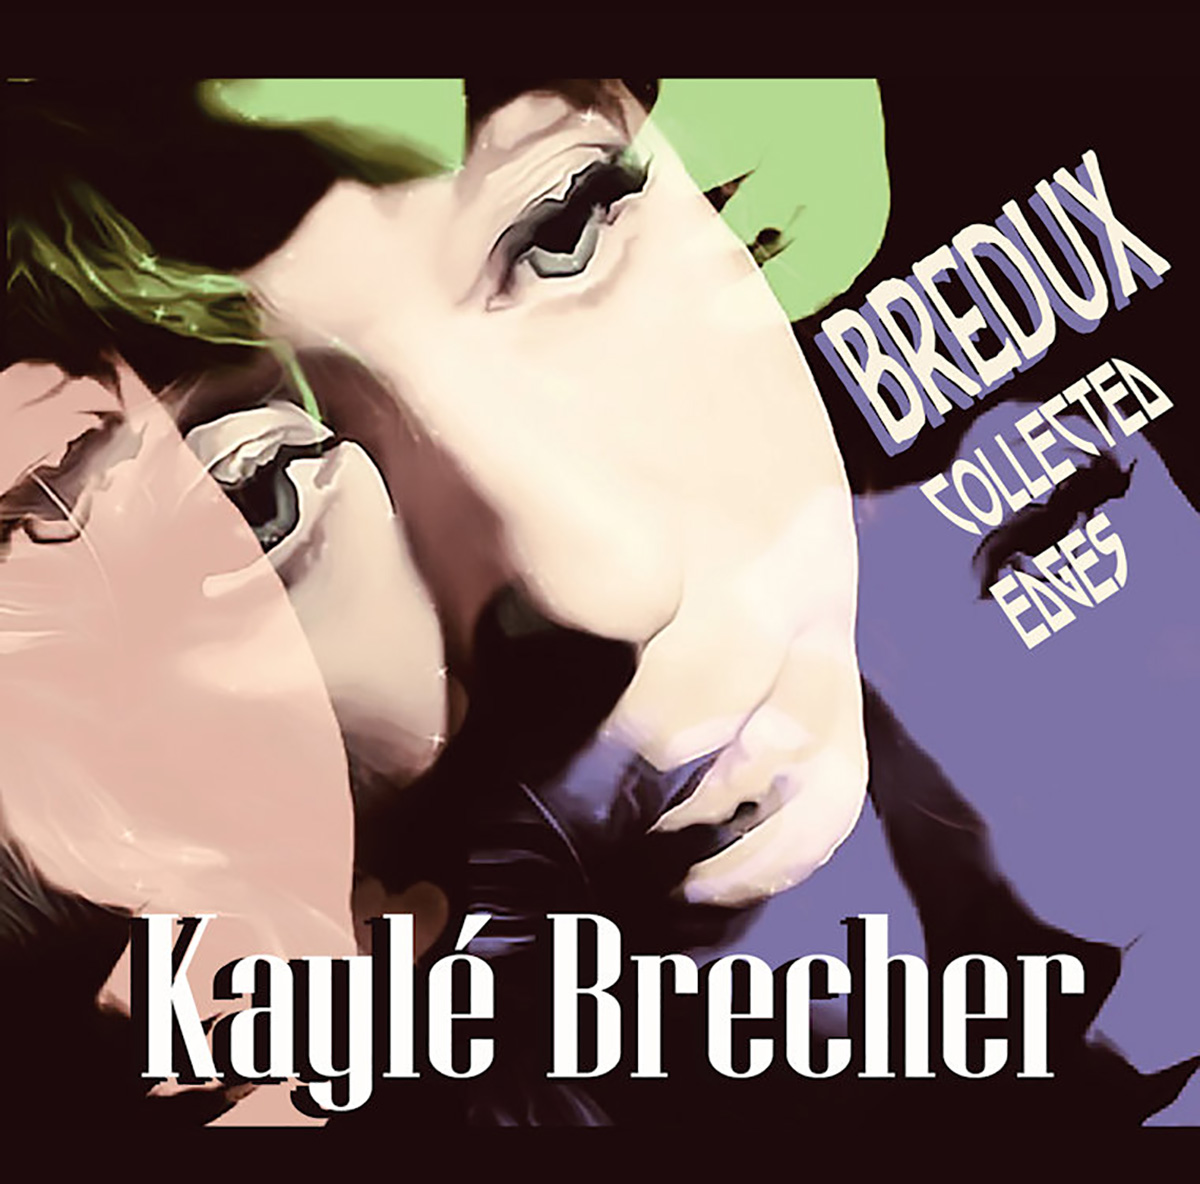 BREDUX: COLLECTED EDGES by Kaylé Brecher